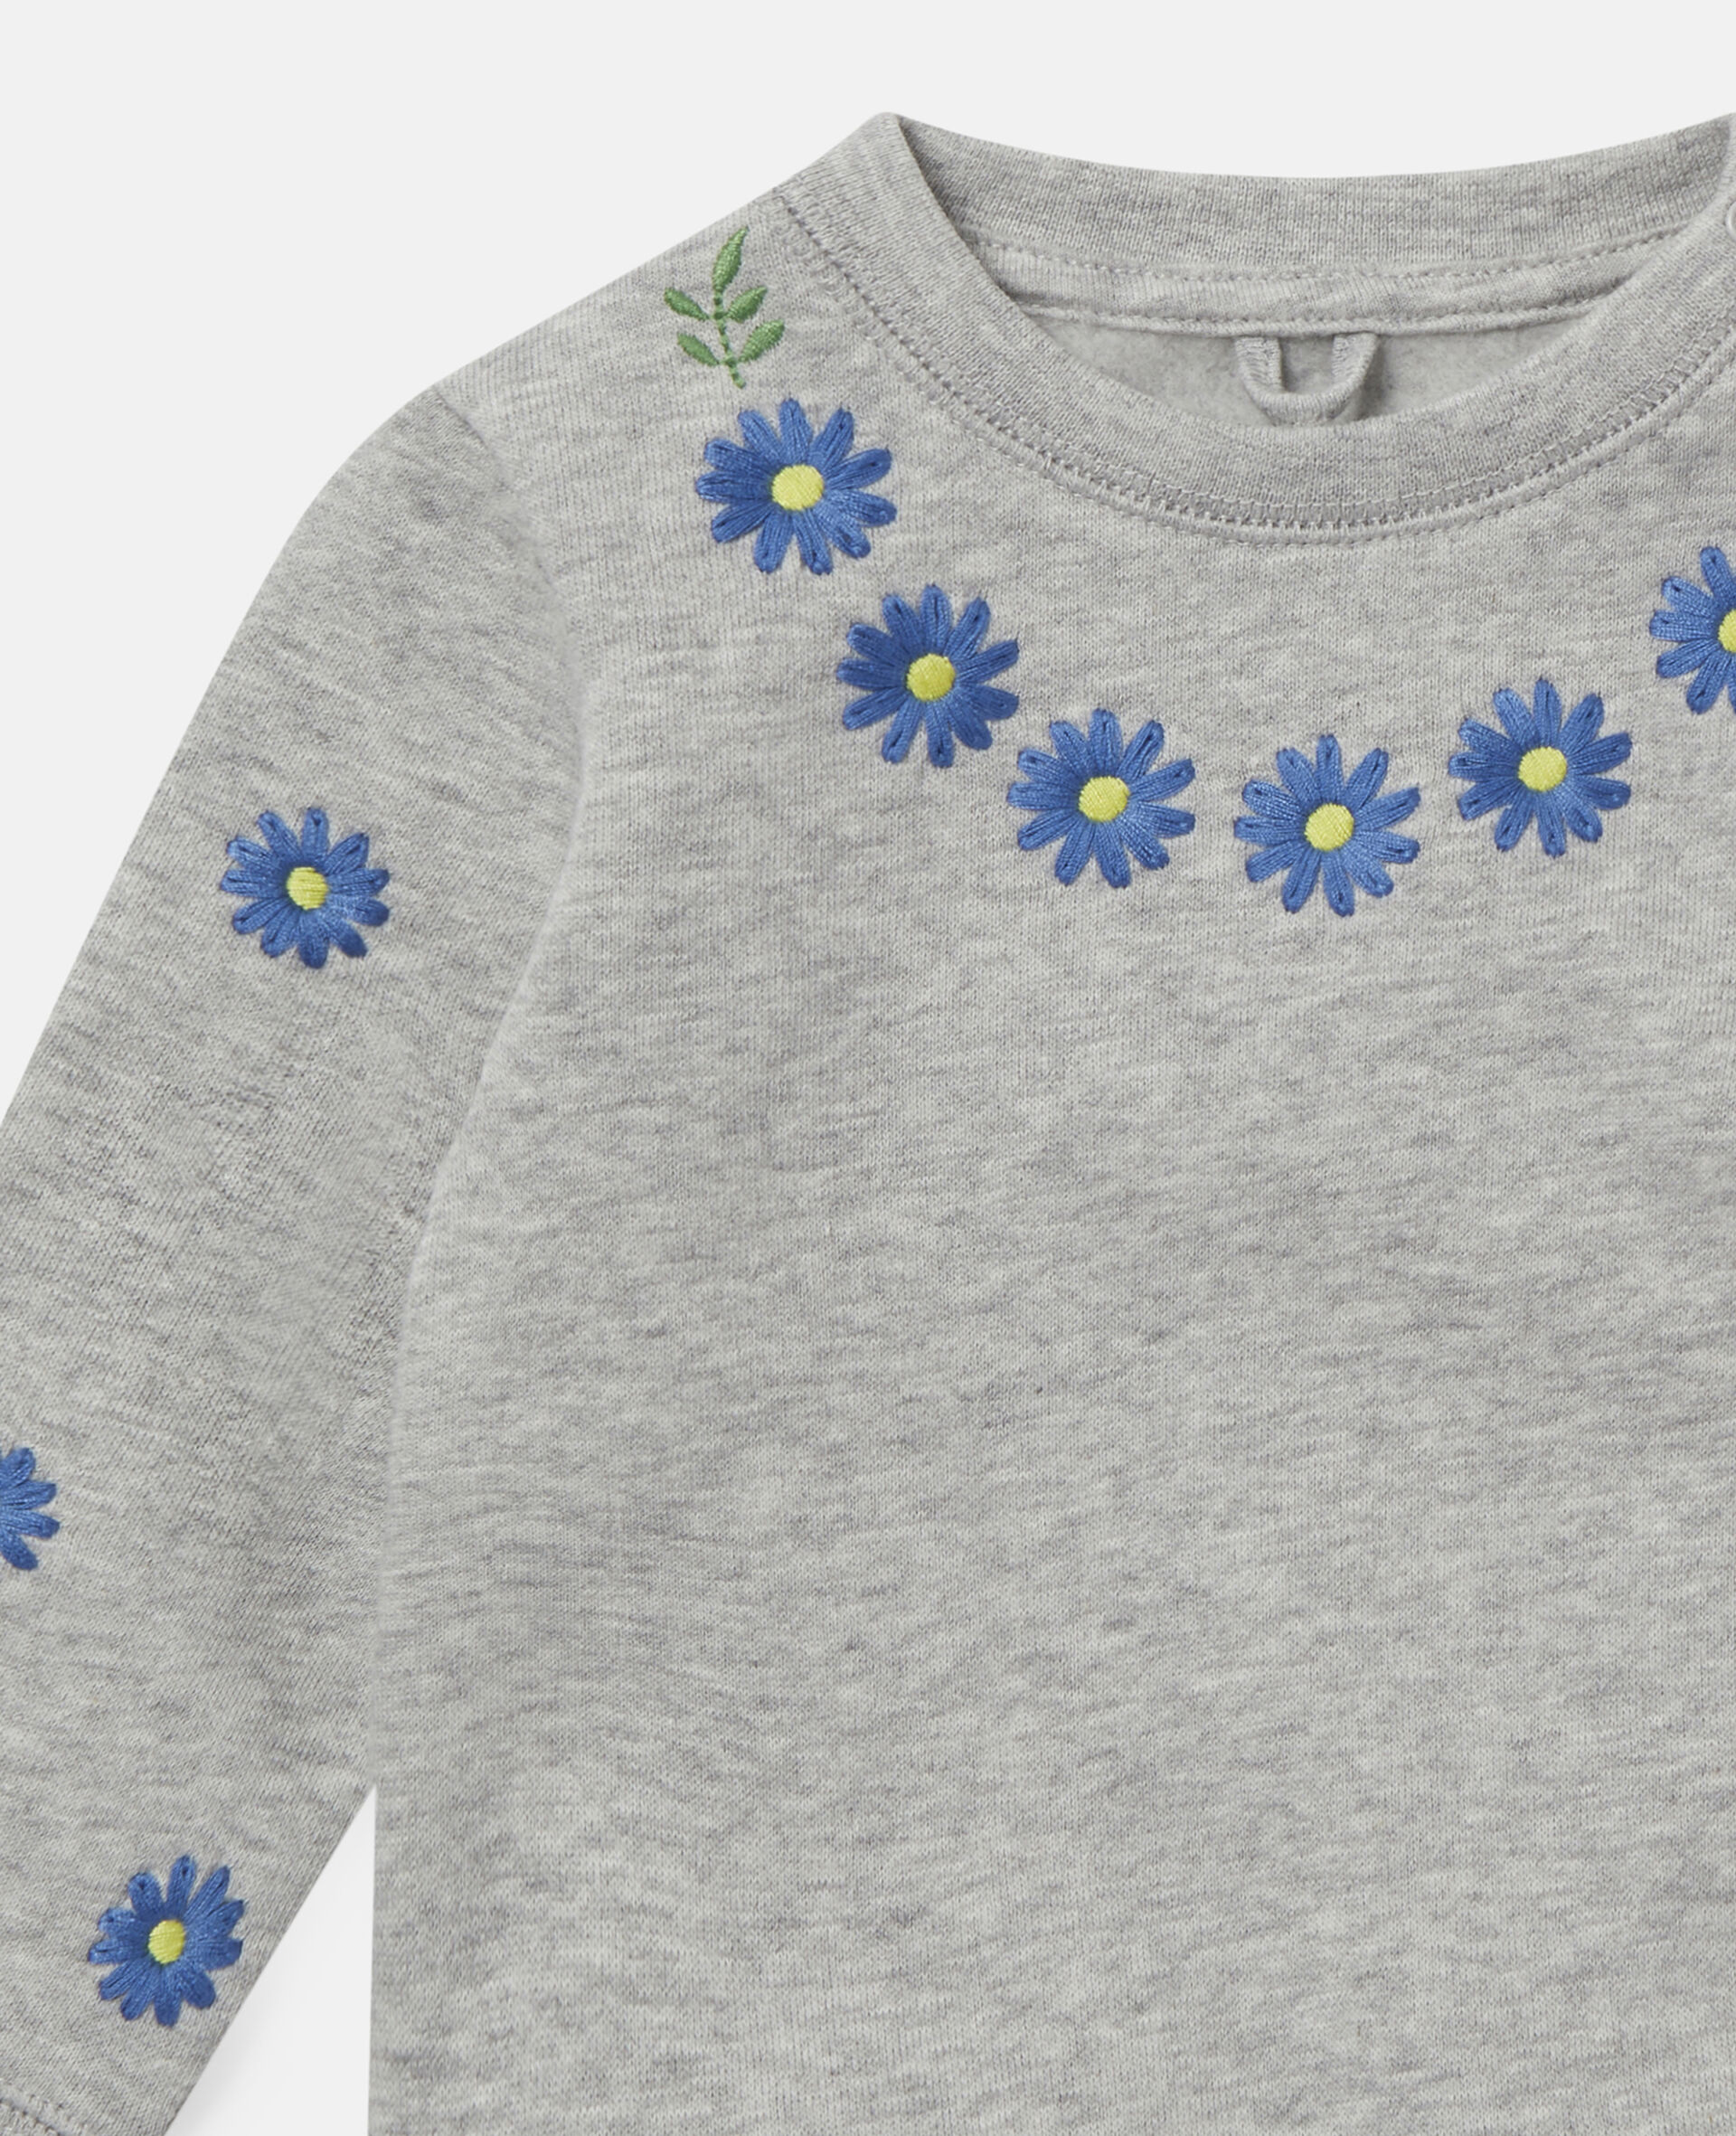 Embroidered Daisies Fleece Sweatshirt -Grey-large image number 1